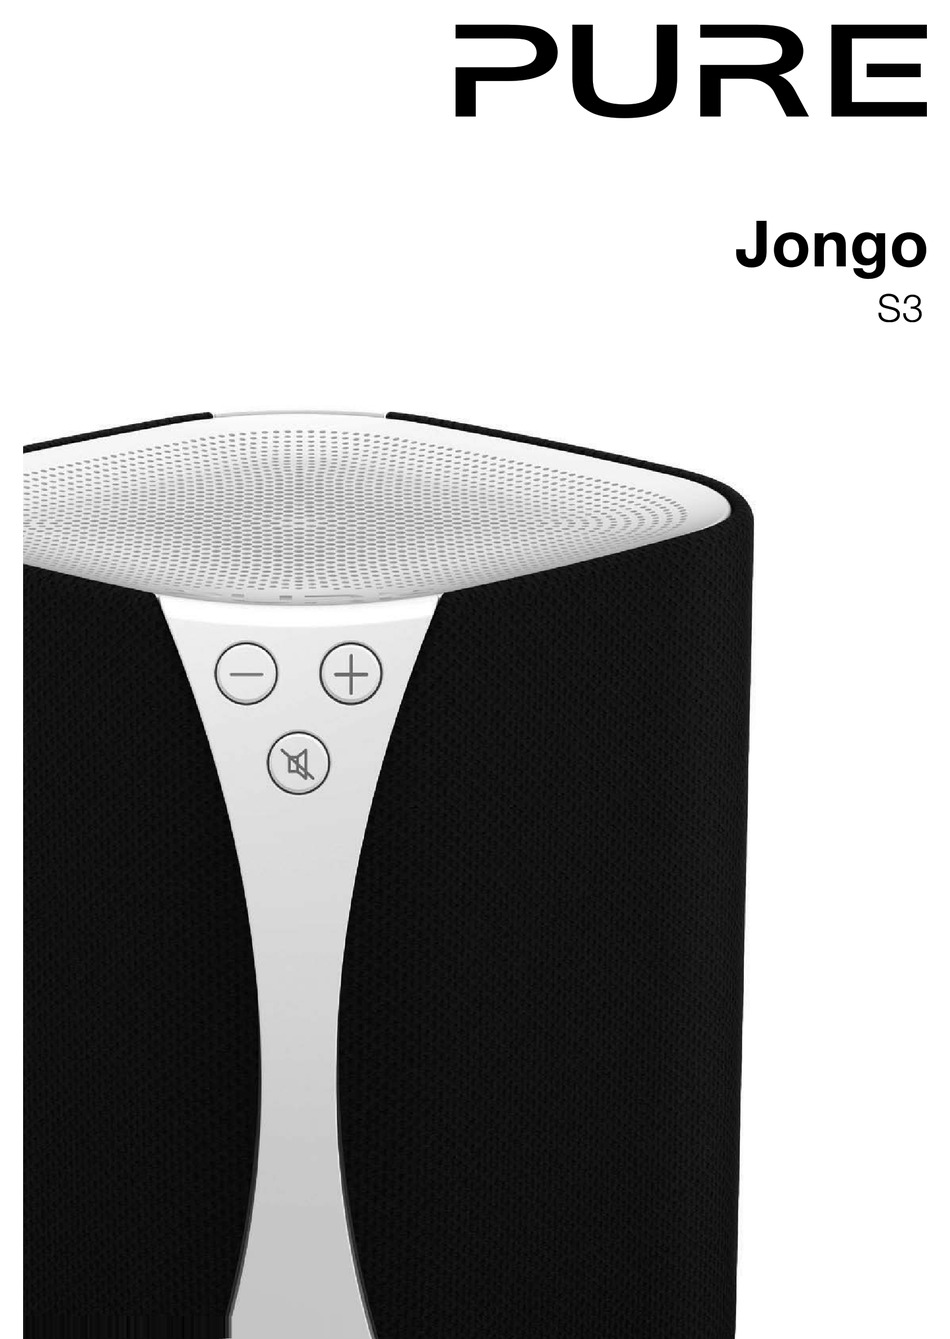 PURE JONGO S3 QUICK START MANUAL Pdf Download | ManualsLib